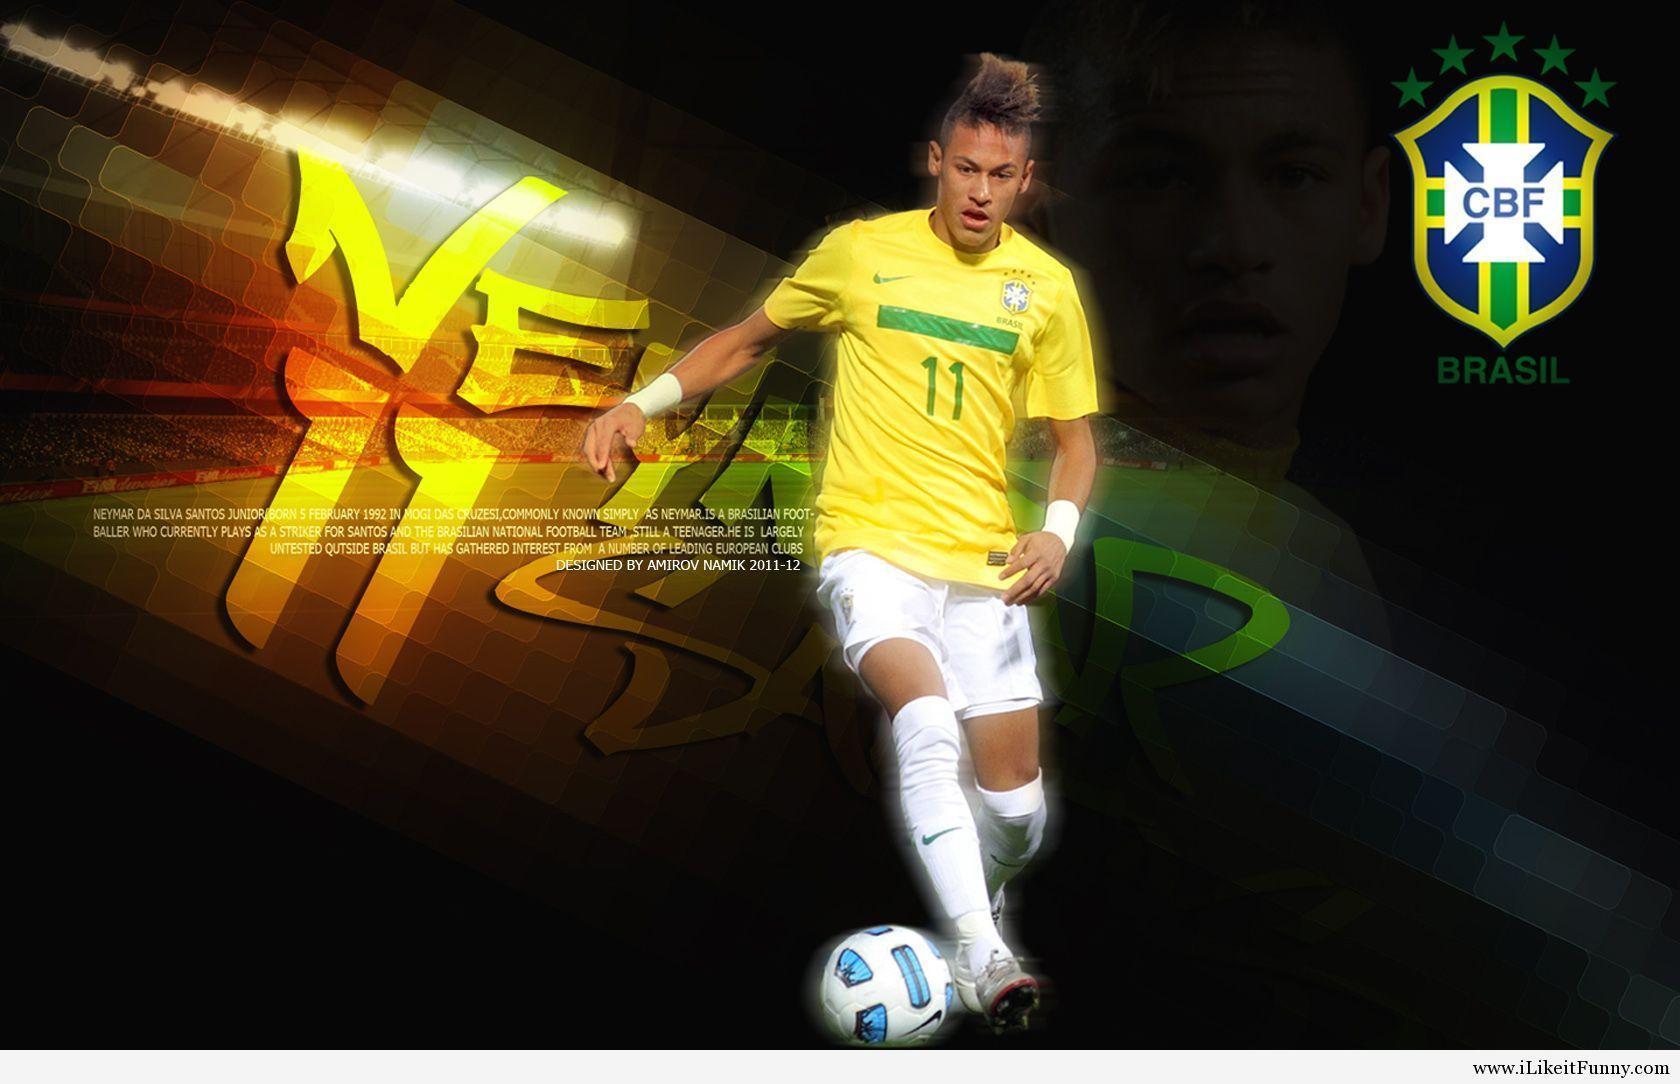 Funny Neymar Brazil world cup fifa 2014 picture wallpaper HD